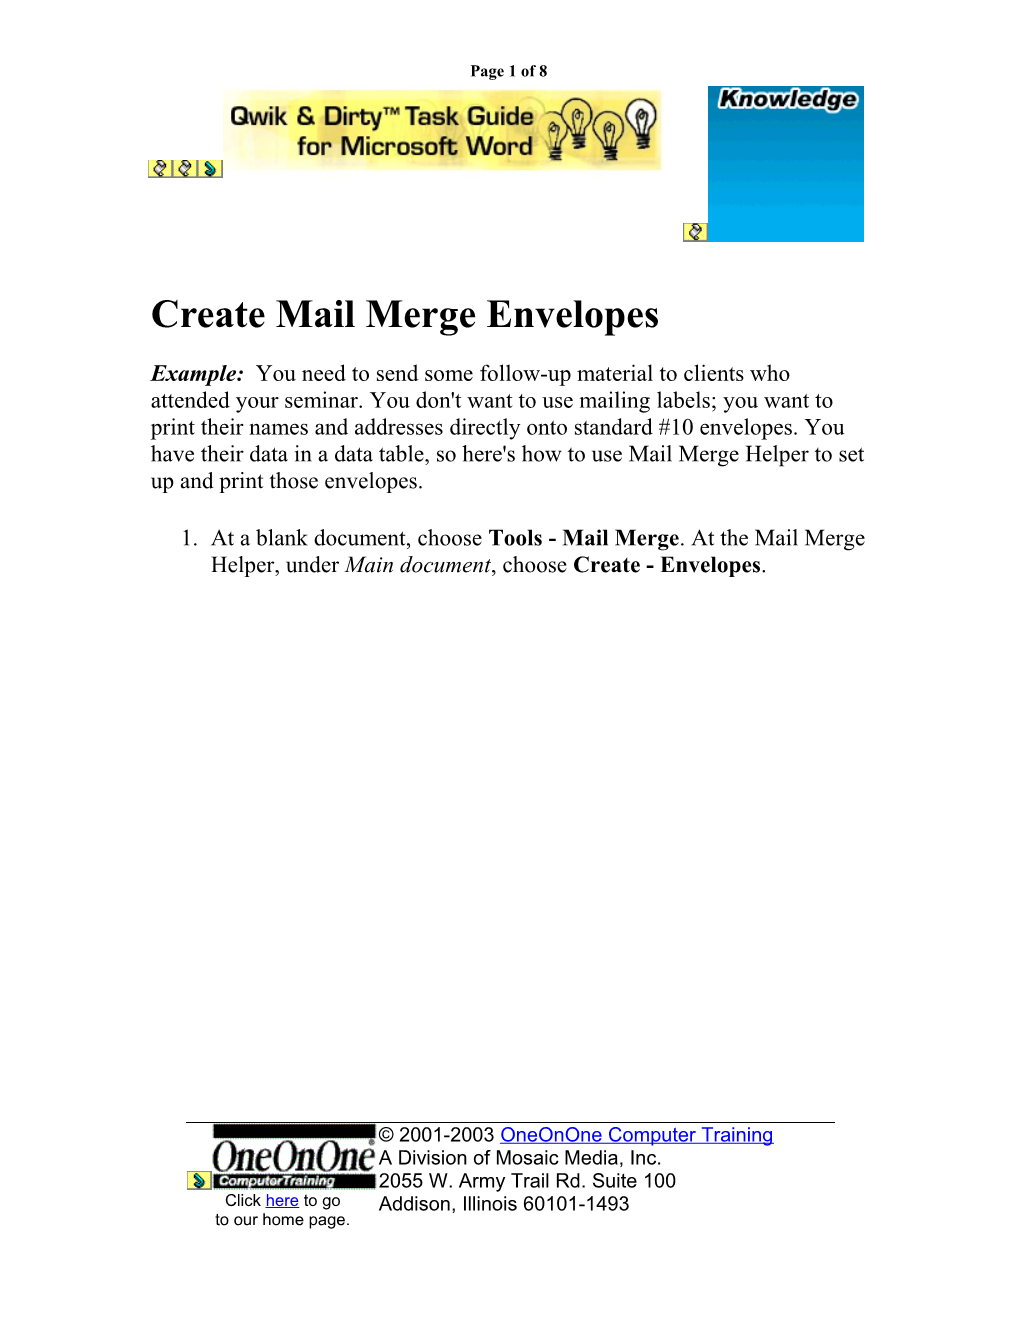 Create Mail Merge Envelopes